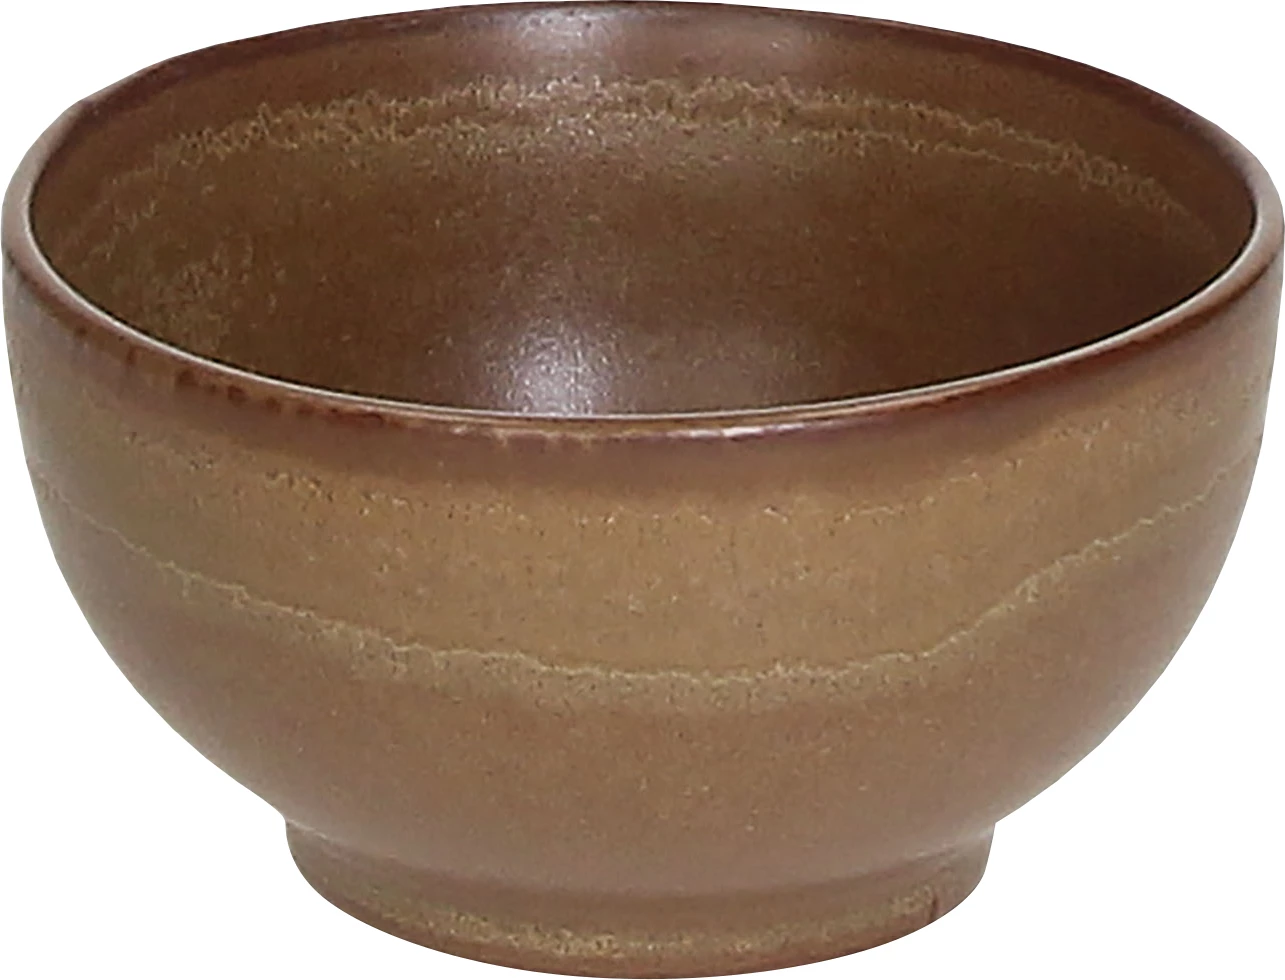 Tognana Terracotta skål, brun, 17 cl, ø9 cm